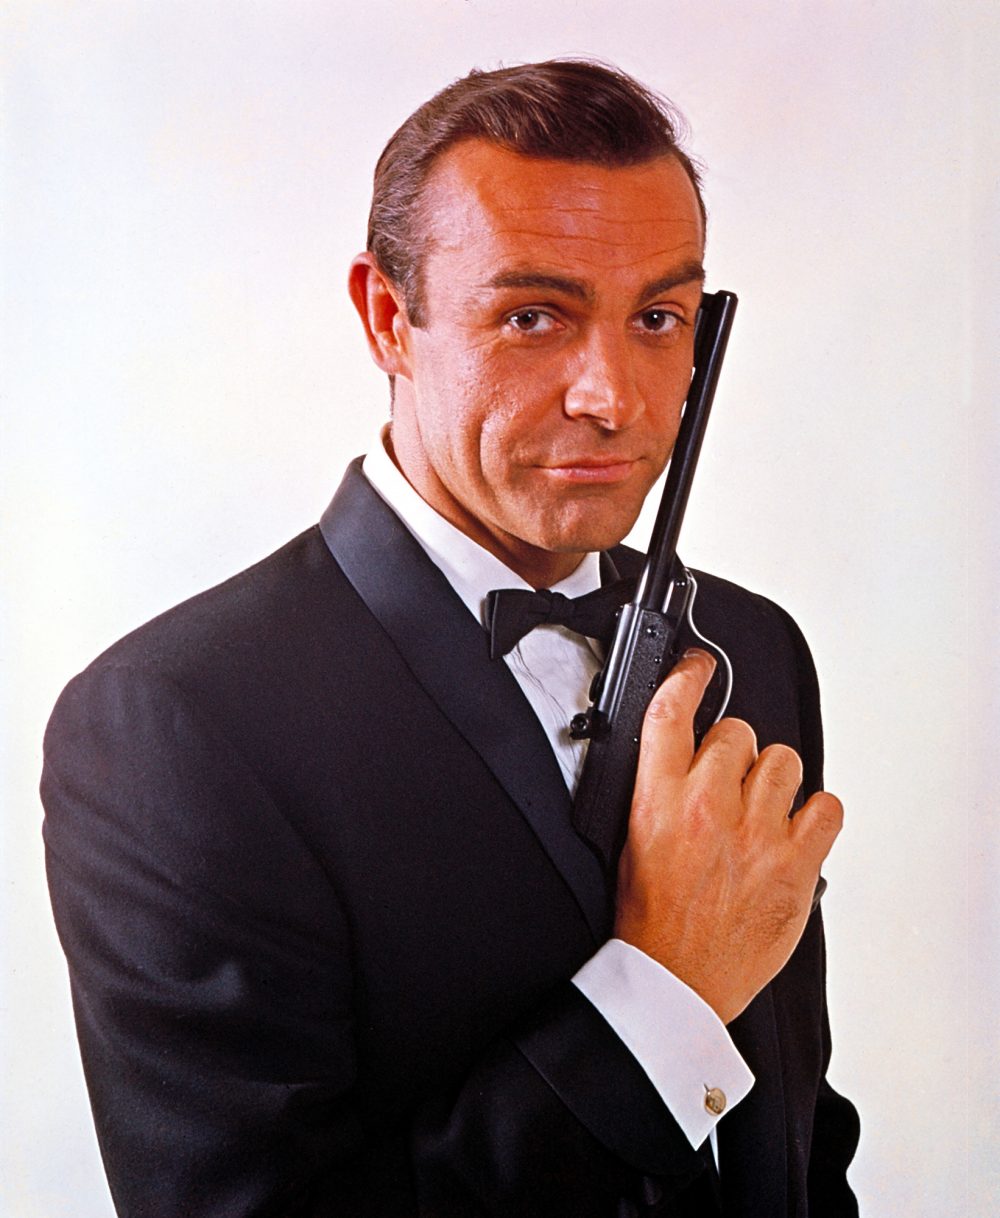 Sean Connery Dead: 'James Bond' Actor Dies at 90